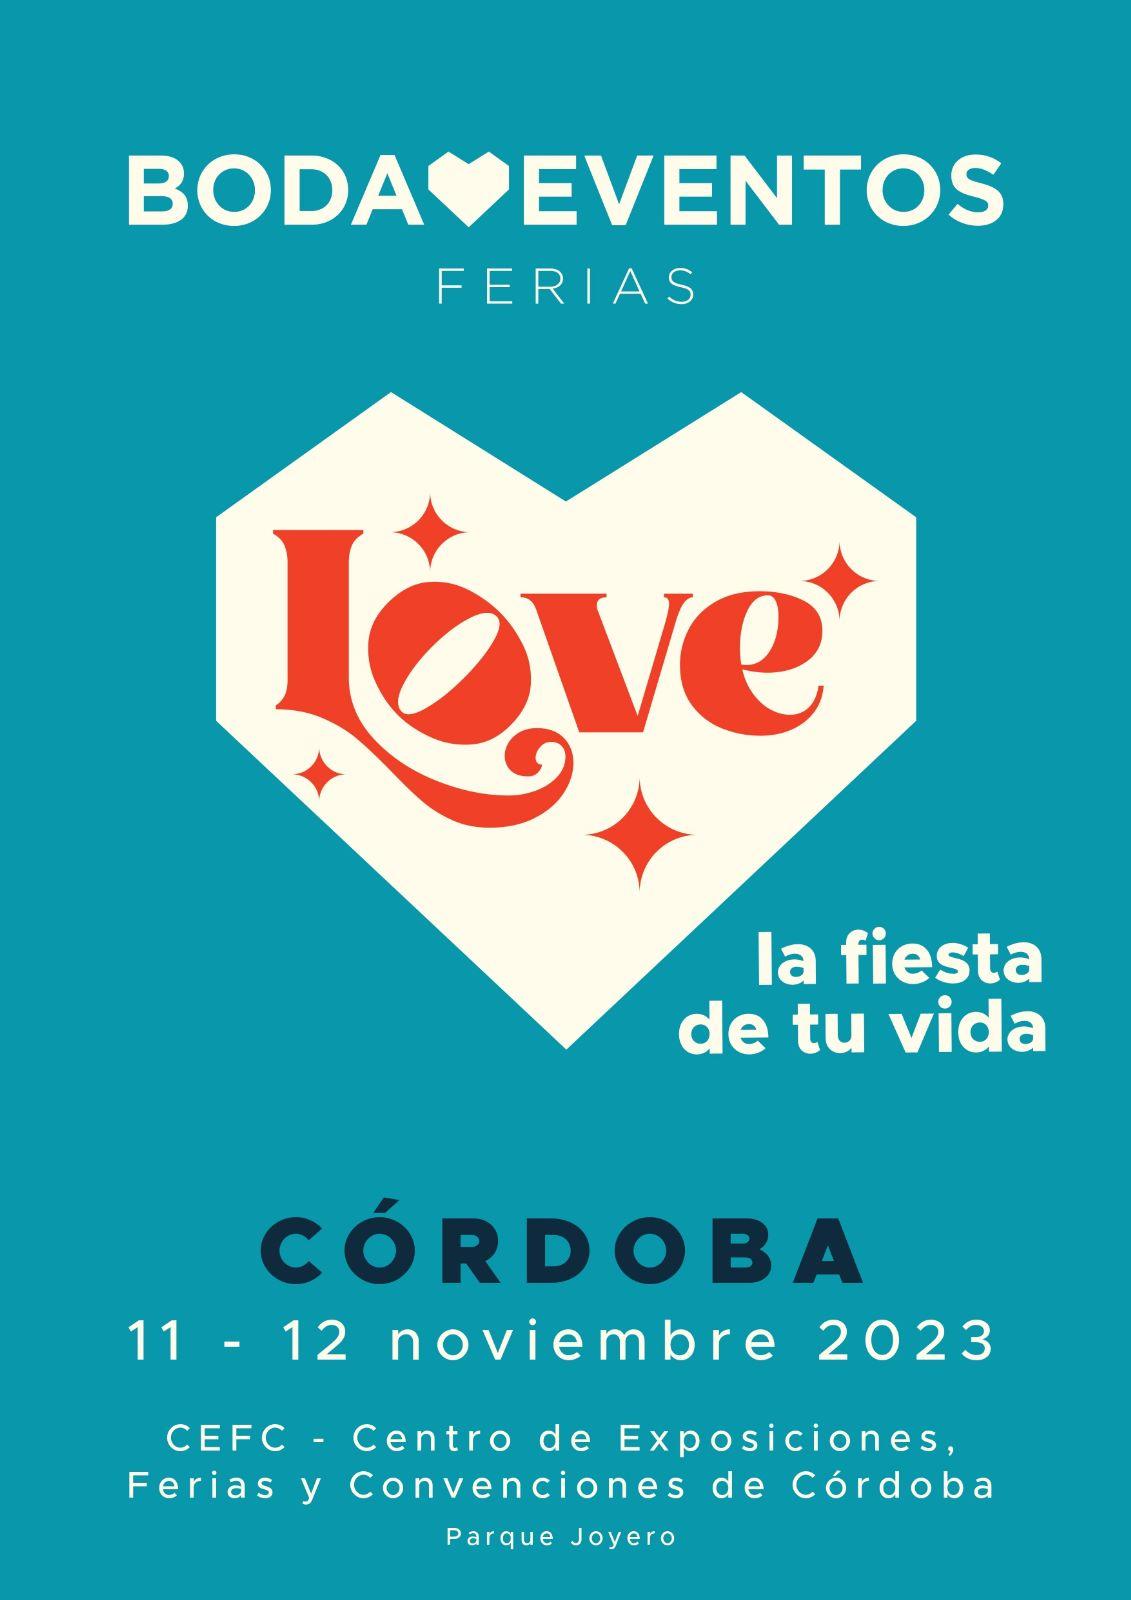 Estaremos en la Feria Boda Eventos en Córdoba